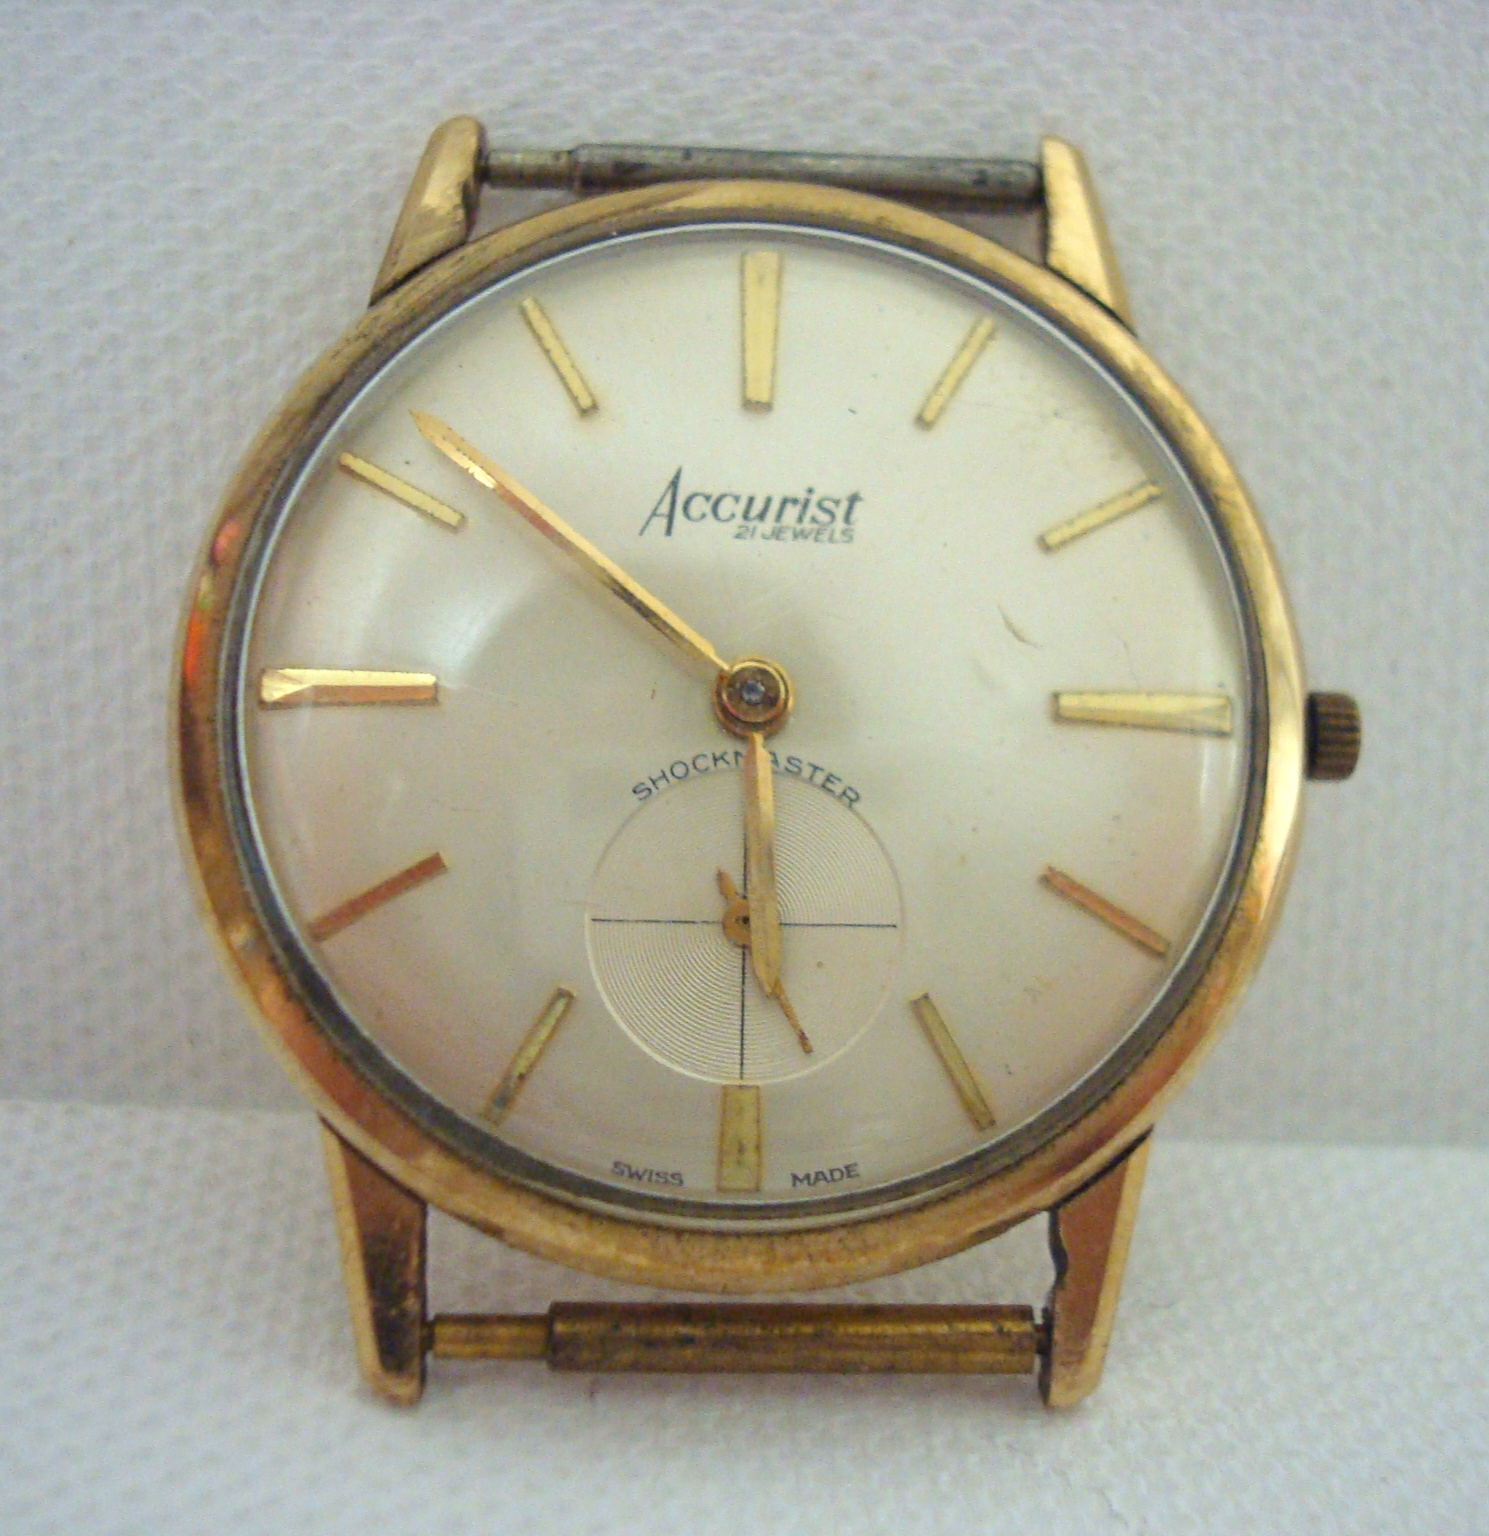 9ct gold Gents Accurist shock master wrist watch (lacks strap)